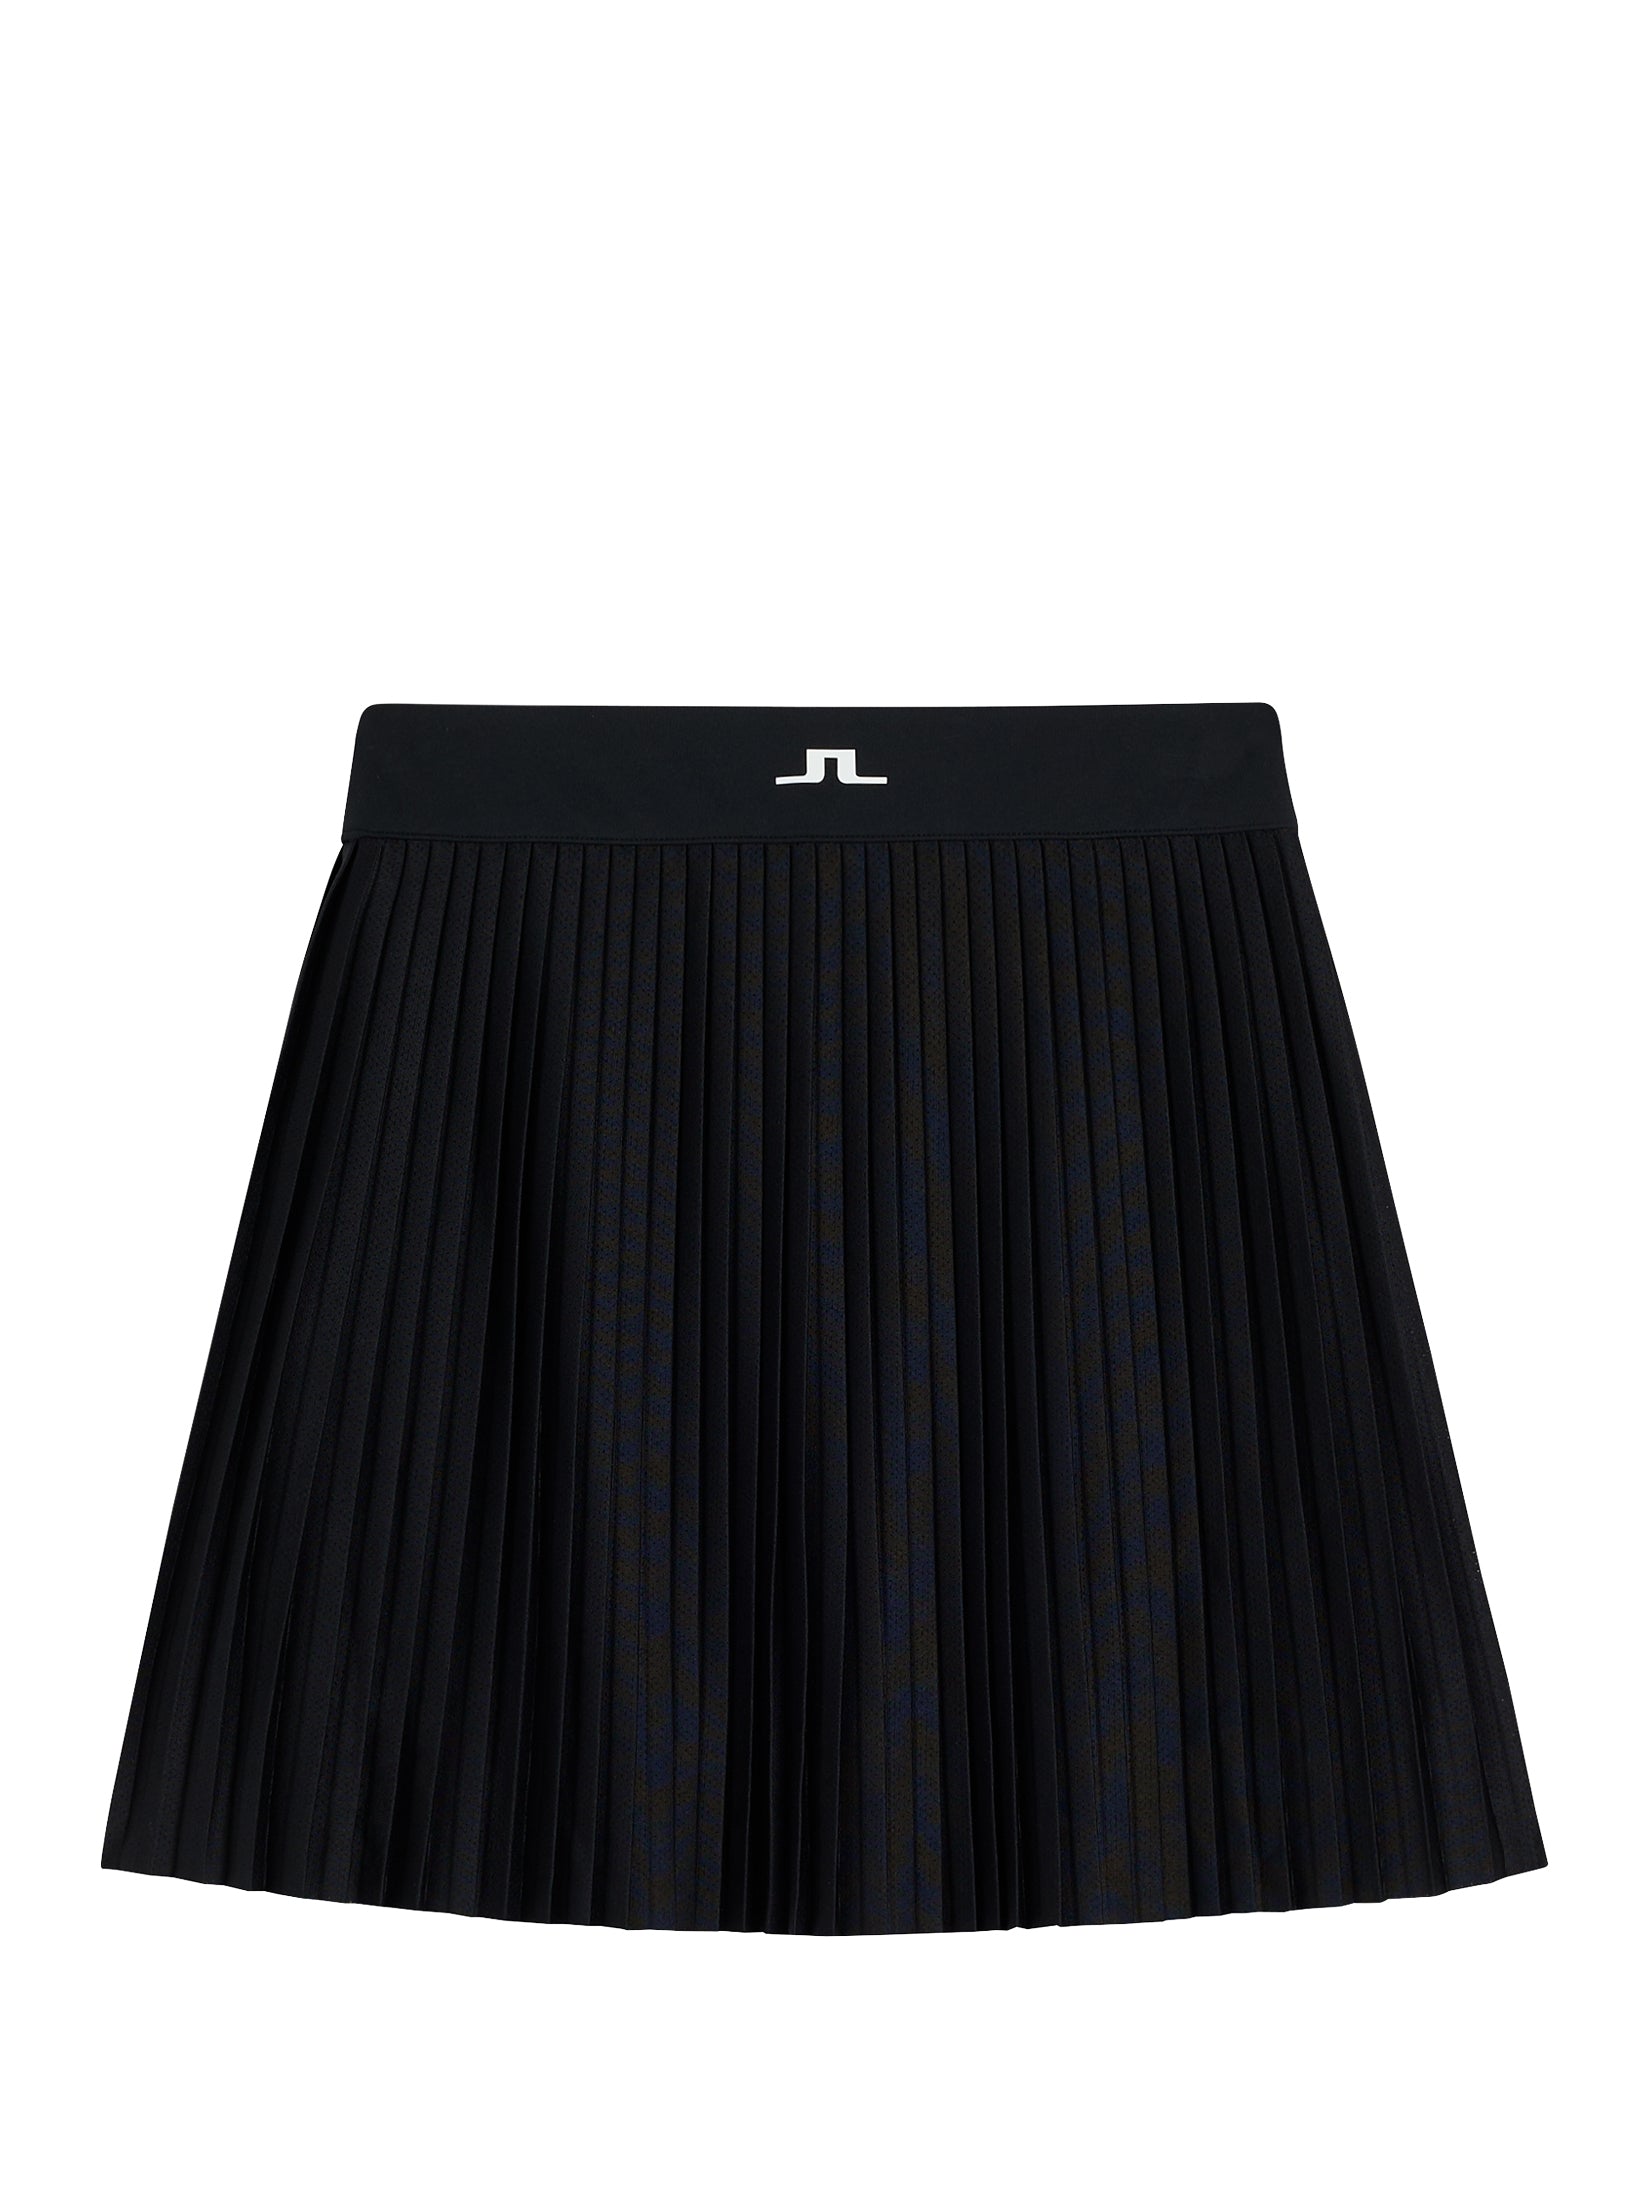 Binx Skirt